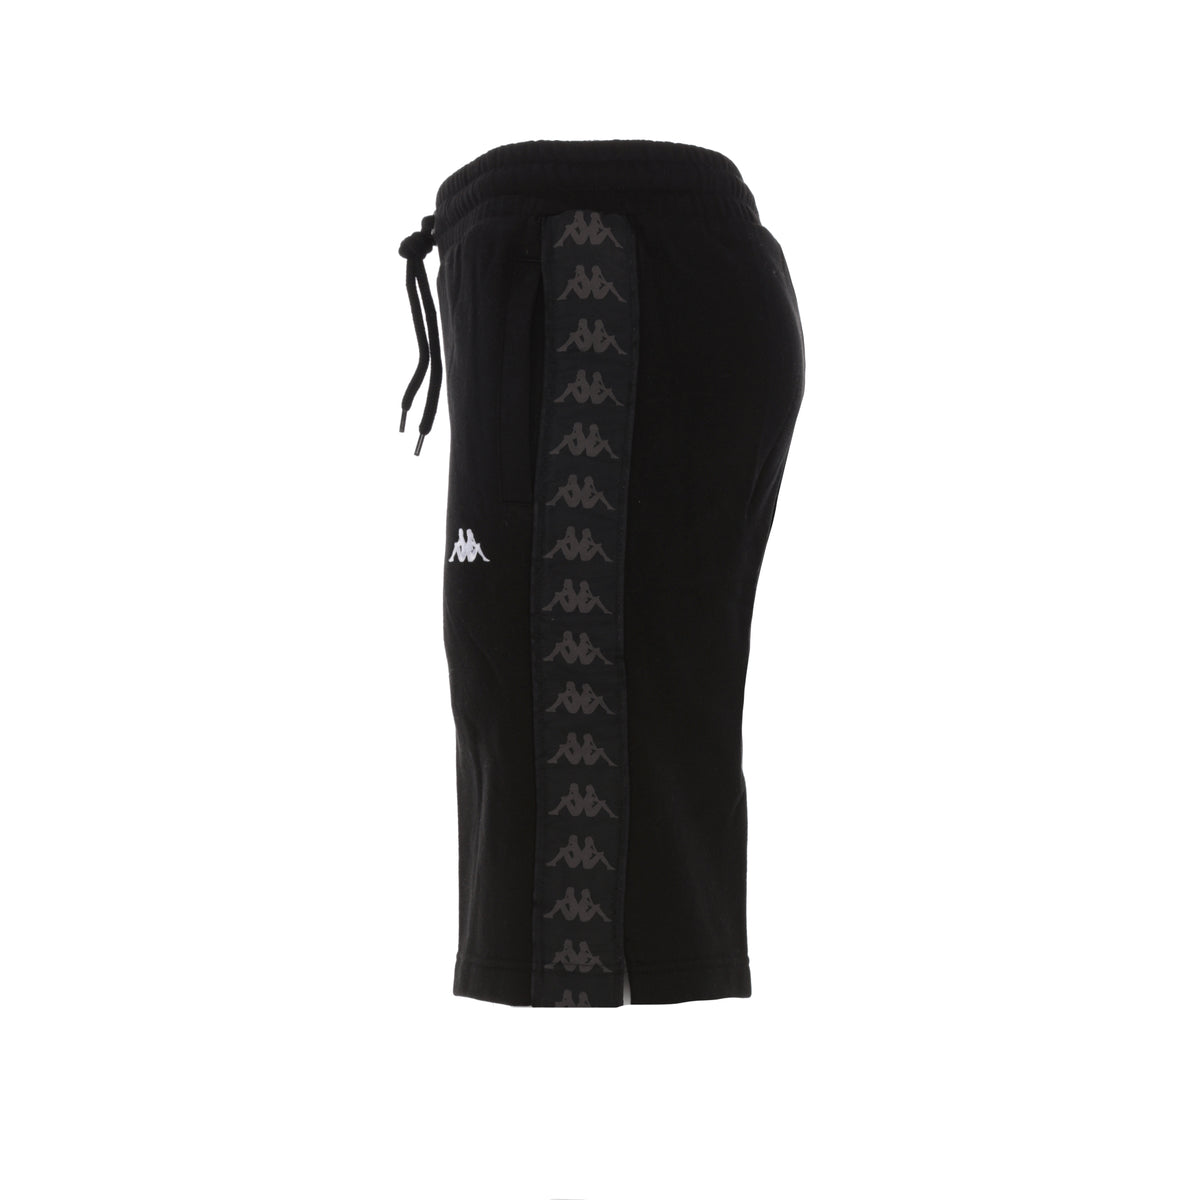 Kappa 222 Banda Marvz Men's Cotton Black Shorts - SIZE Boutique